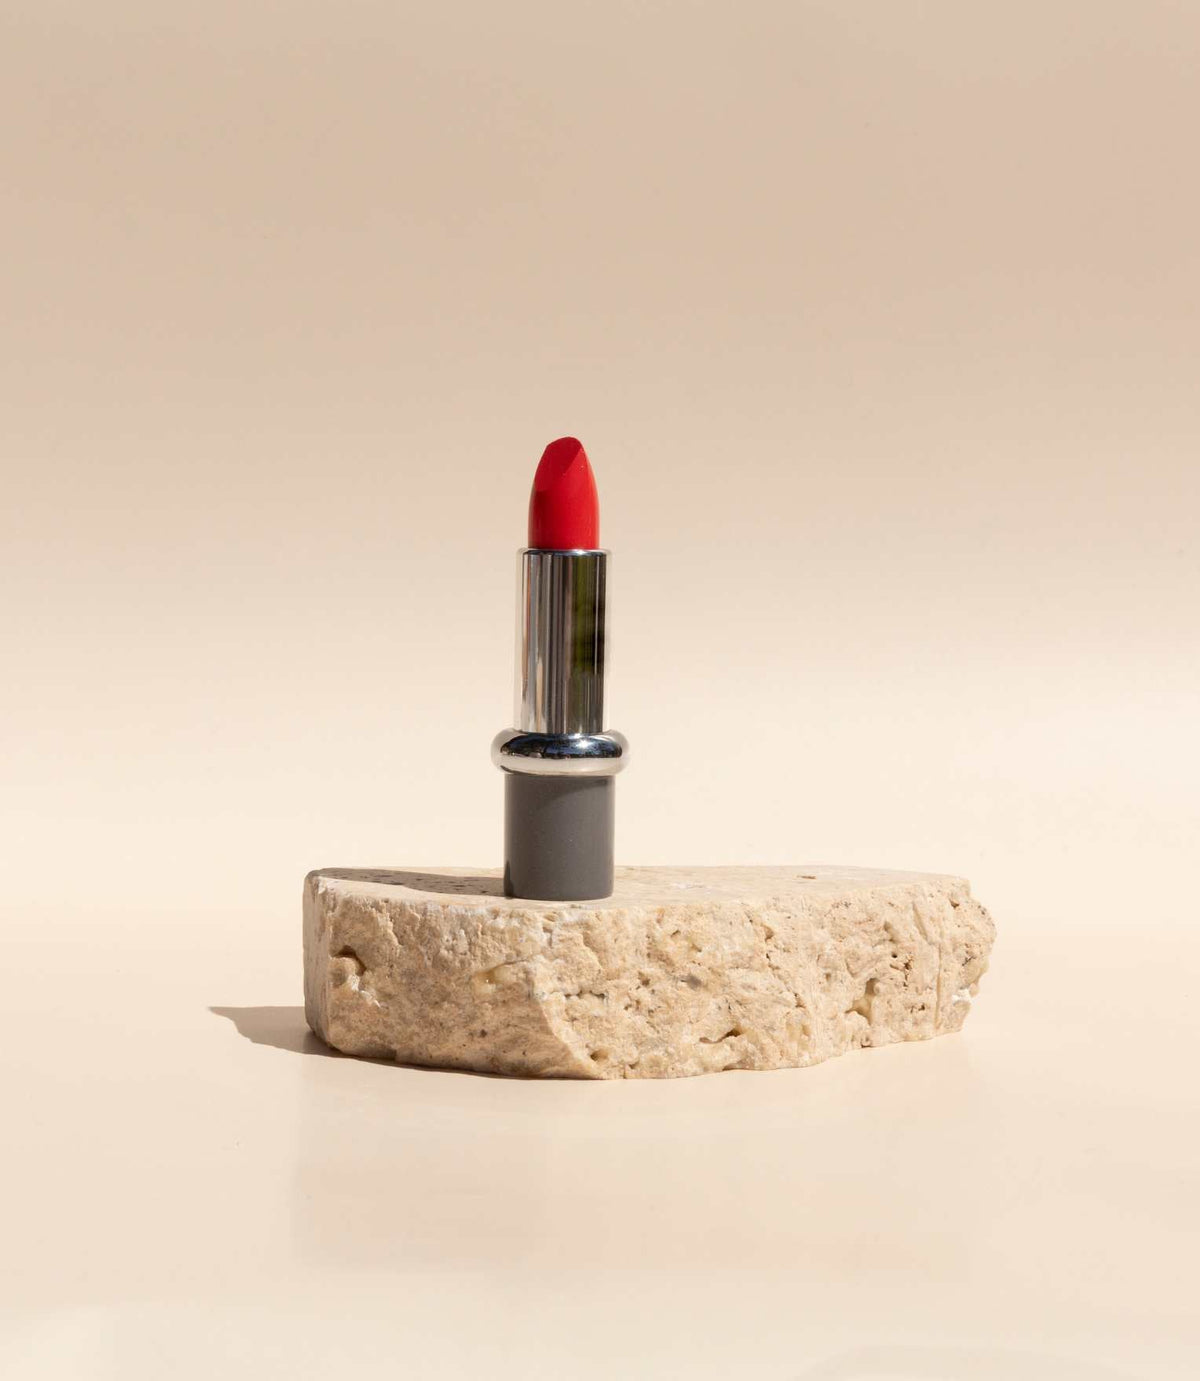 Lipstick with Prolip - Velvet Peach (601) 4g